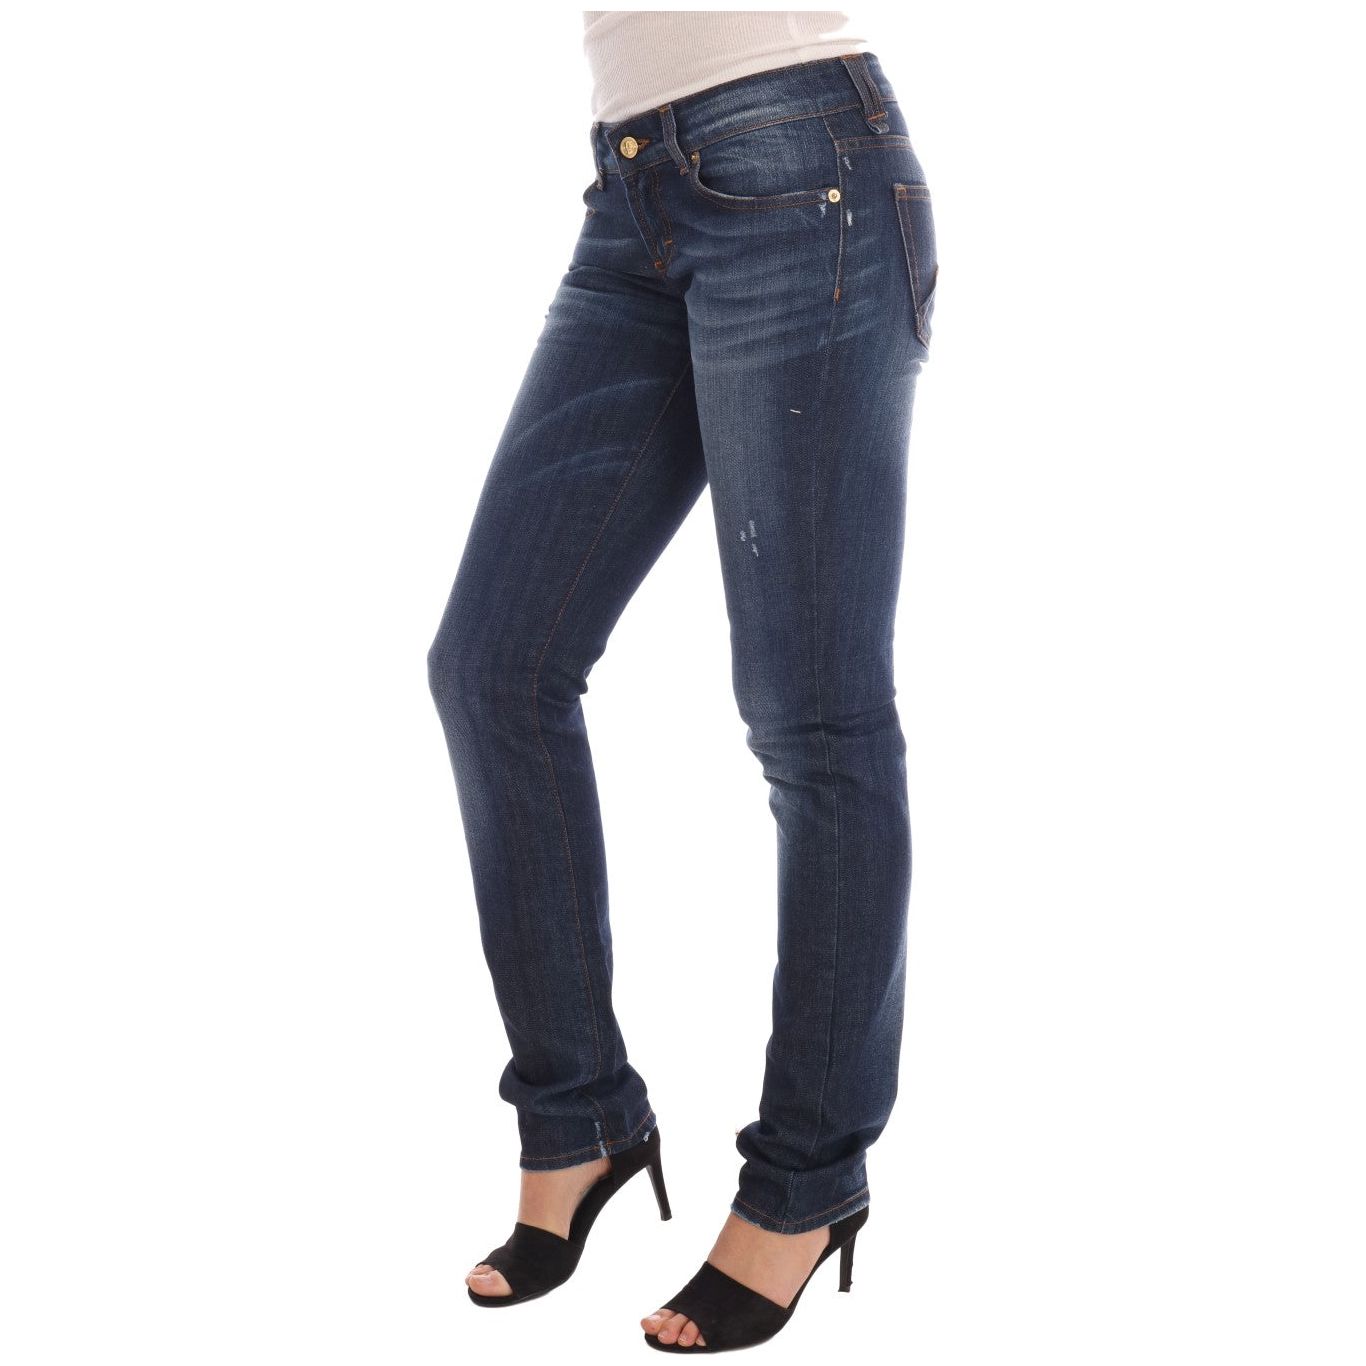 John Galliano Stylish Skinny Low Rise Denim Jeans blue-wash-cotton-stretch-skinny-low-jeans 490796-blue-wash-cotton-stretch-skinny-low-jeans-1.jpg